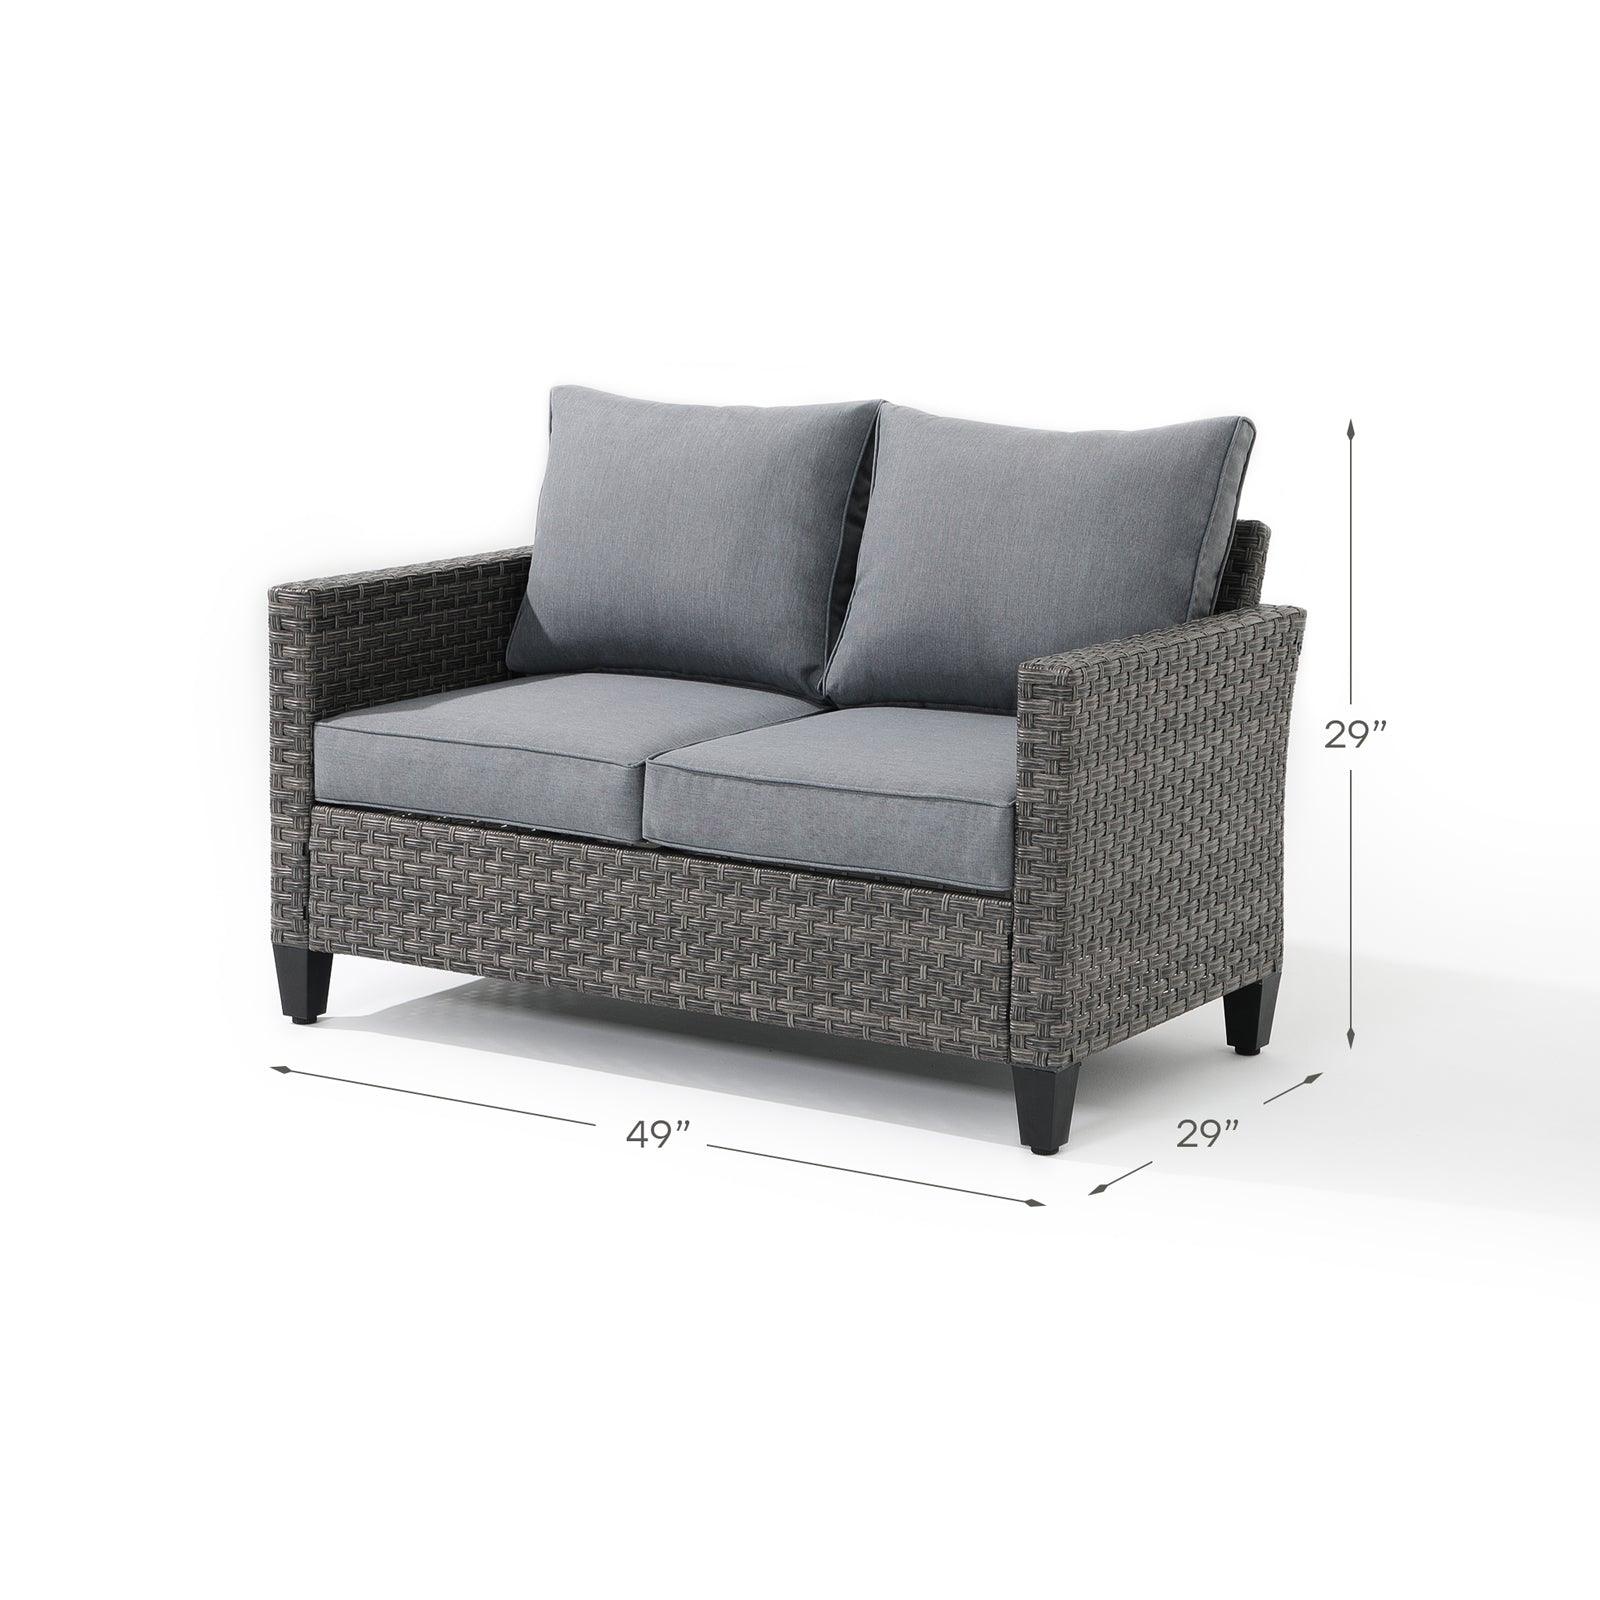 Ayia grey loveseat with rattan design, grey cushions, dimension information  - Jardina Furniture #color_Grey